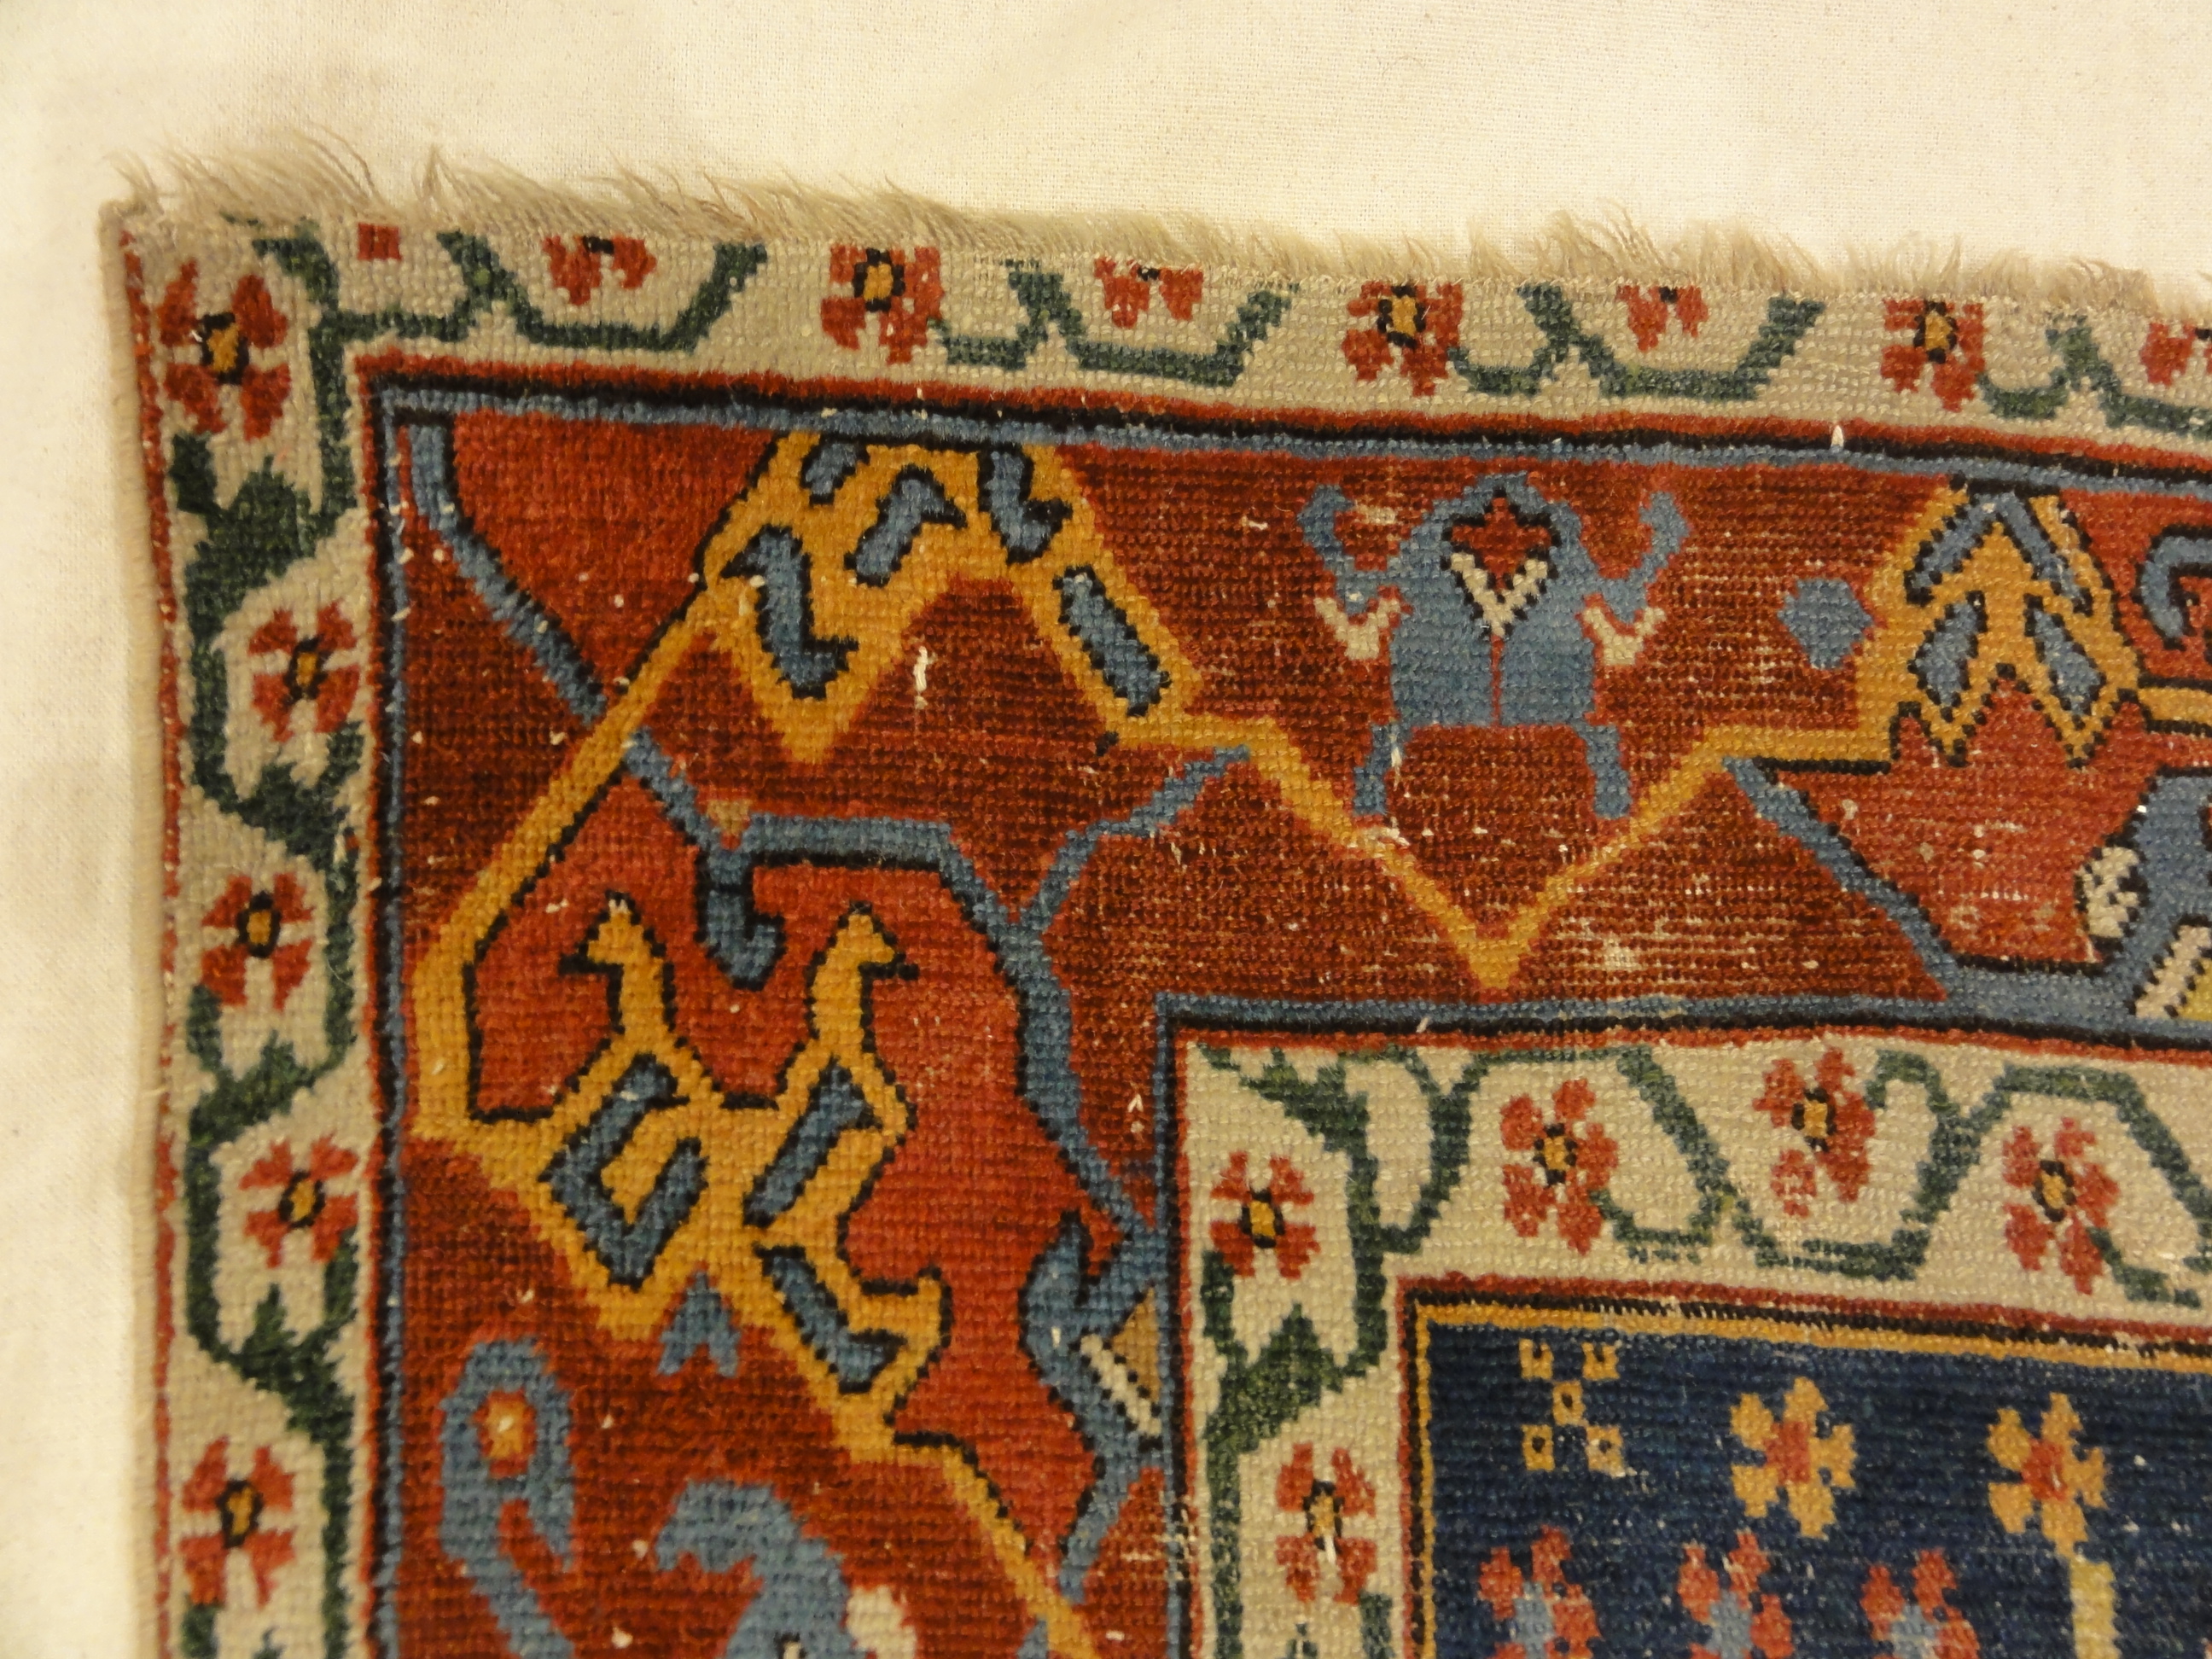 Antique Kurdish Shrub Rug Circa 17th Century A piece of genuine authentic woven carpet art sold by Santa Barbara Design Center Rugs and More.